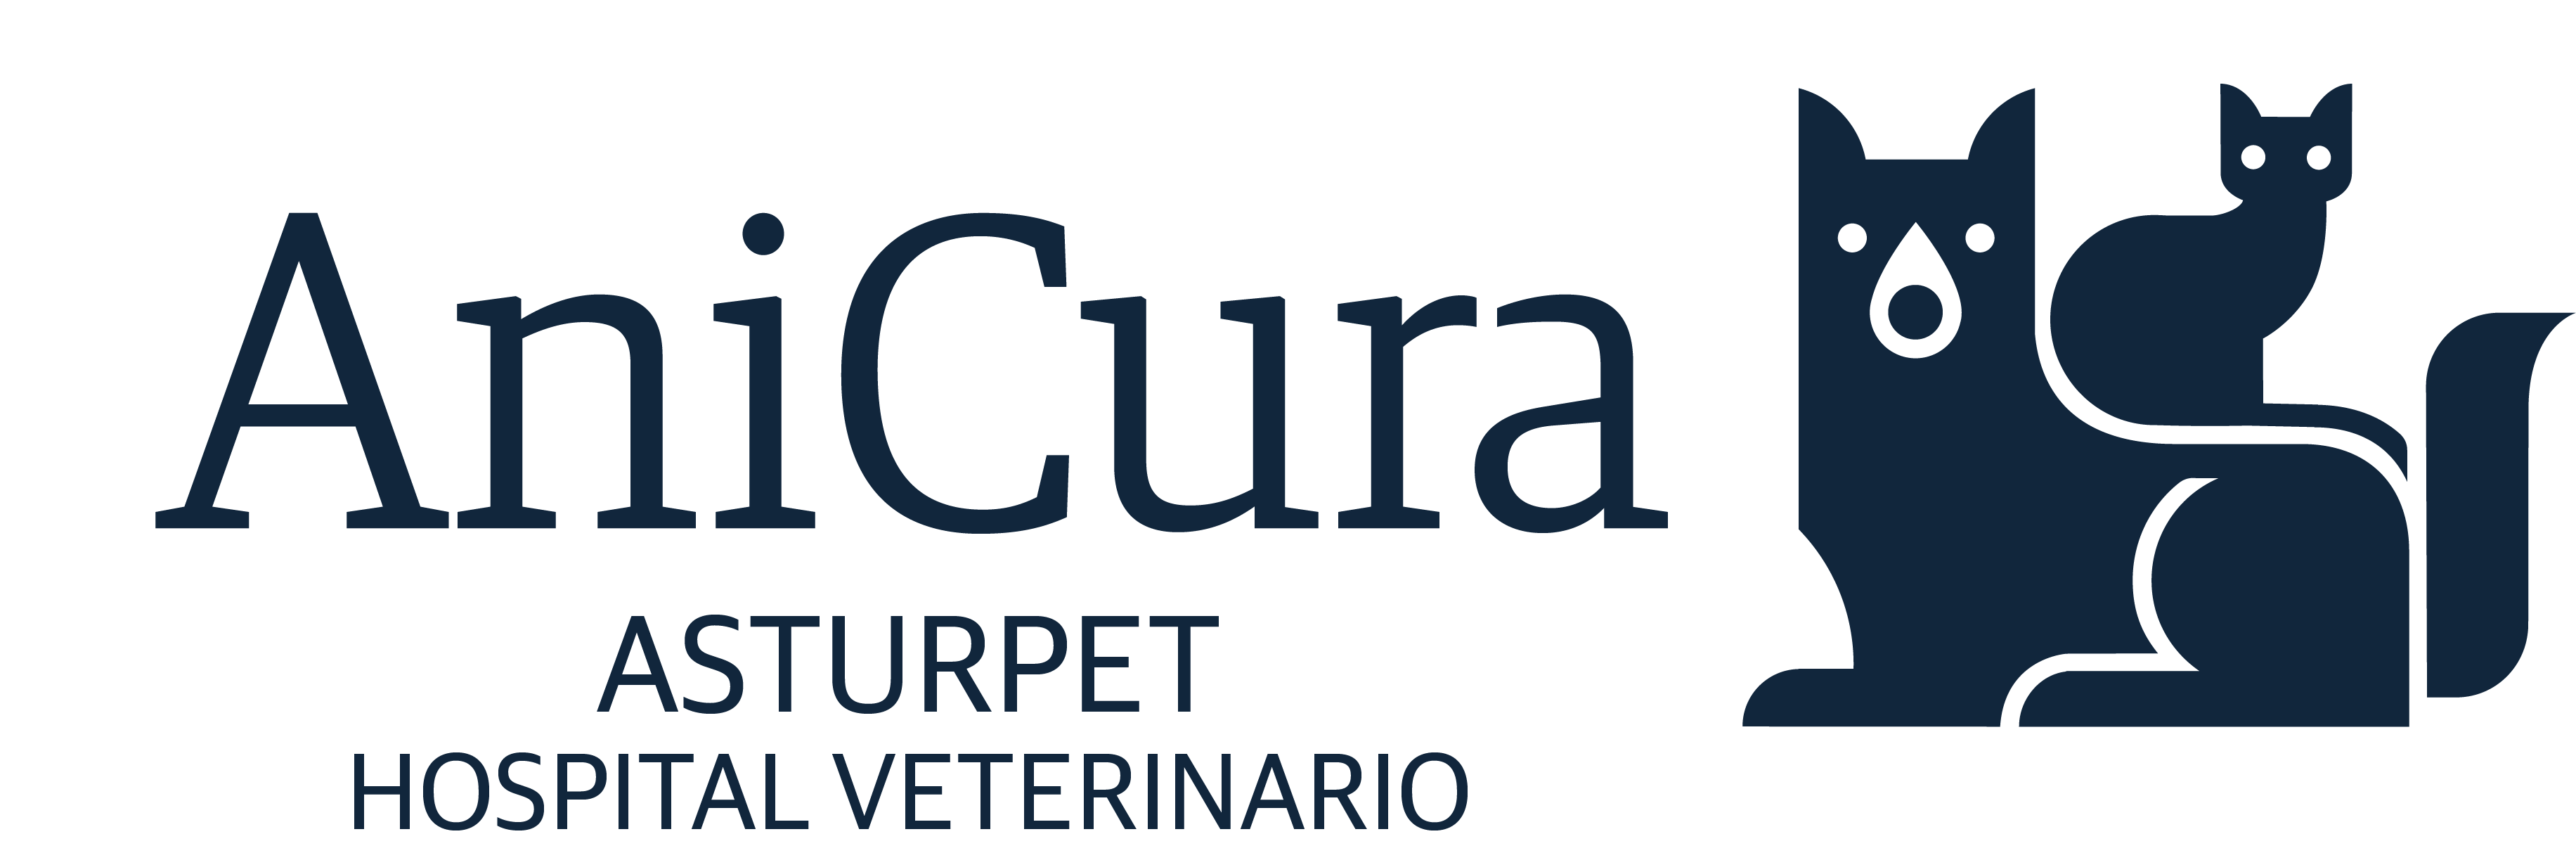 AniCura Asturpet Hospital Veterinario logo